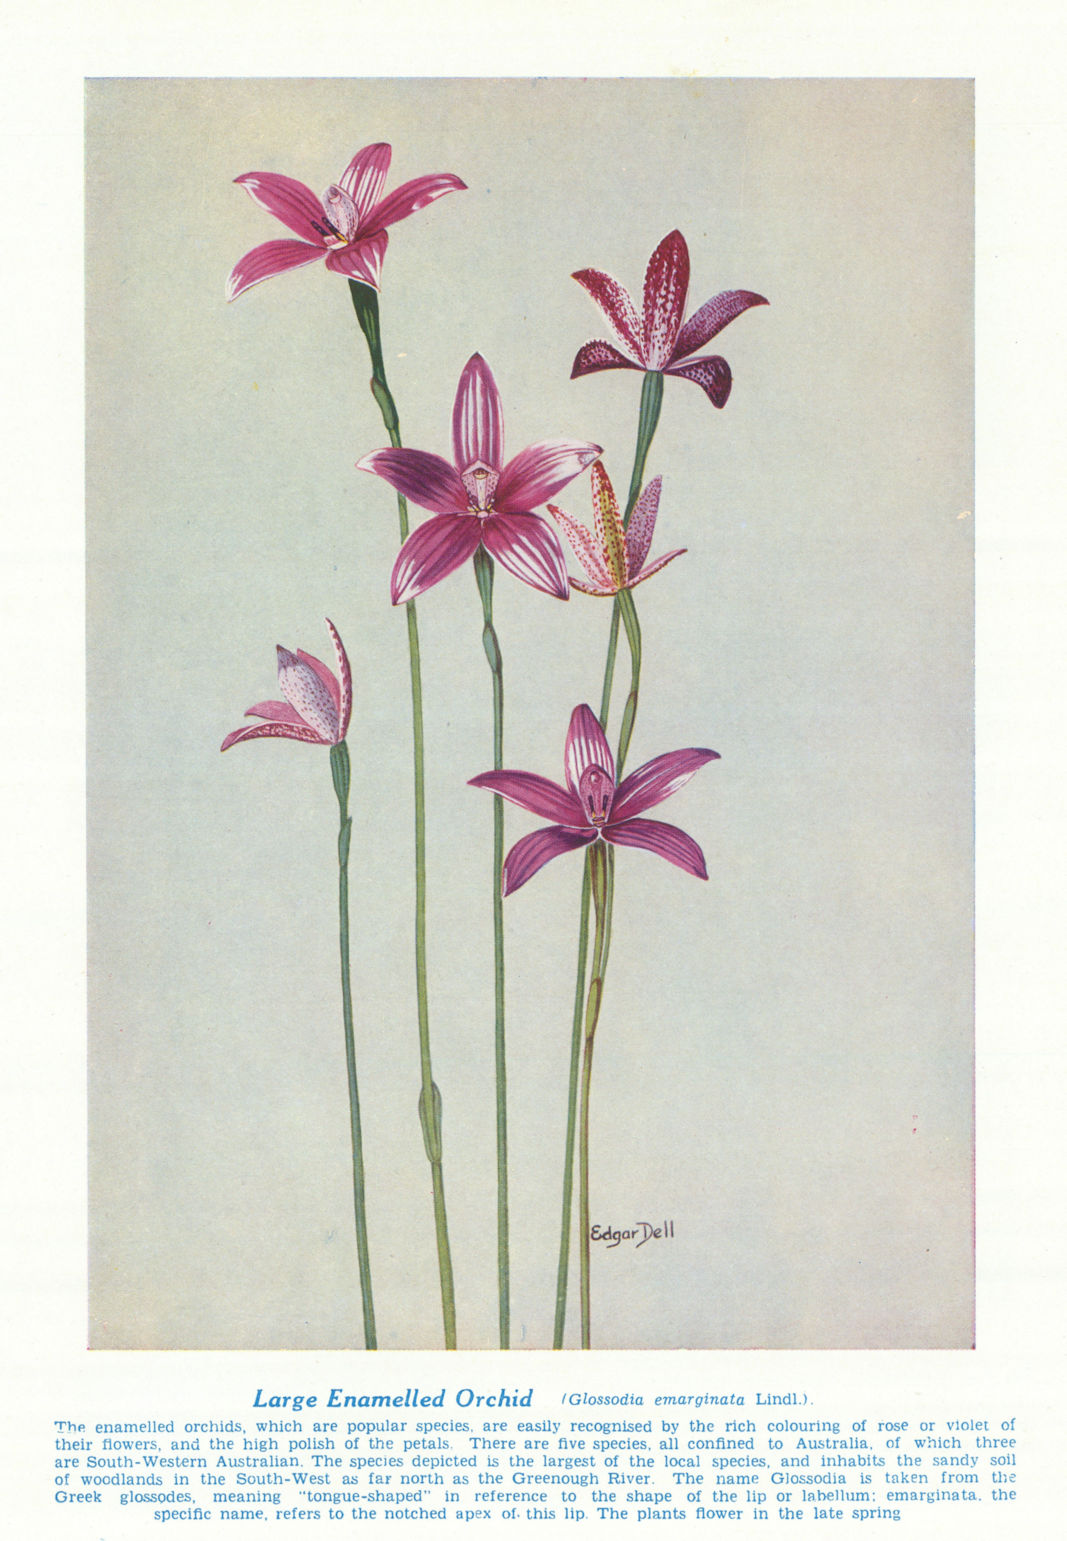 Large Enamelled Orchid (Glossodiae marginata). West Australian Wild Flowers 1950